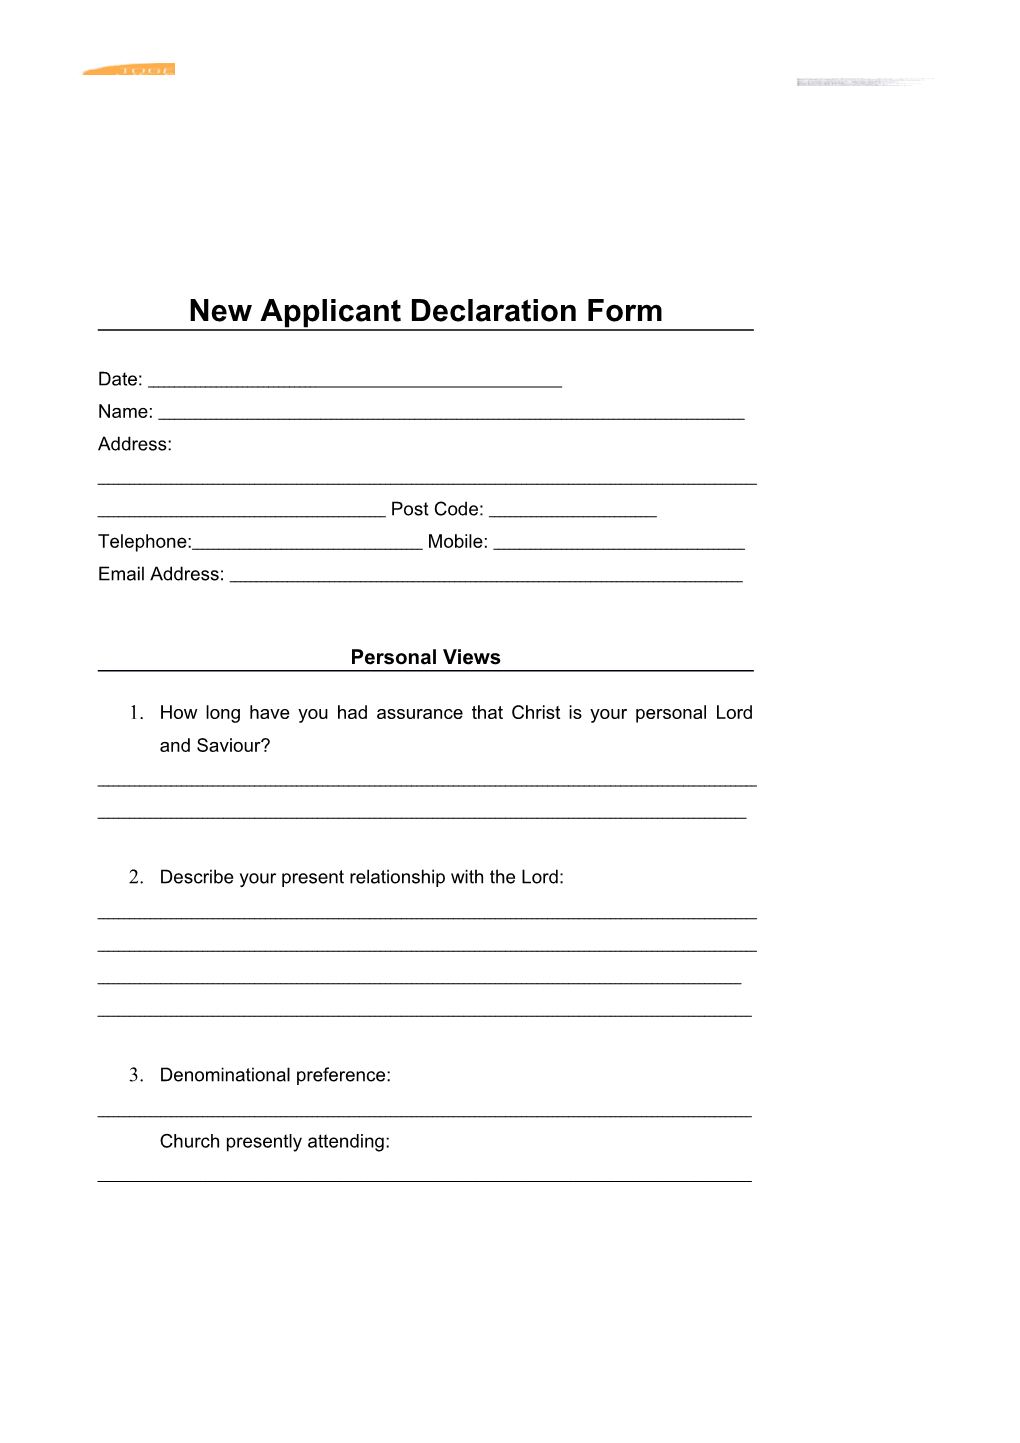 New Applicant Declaration Form